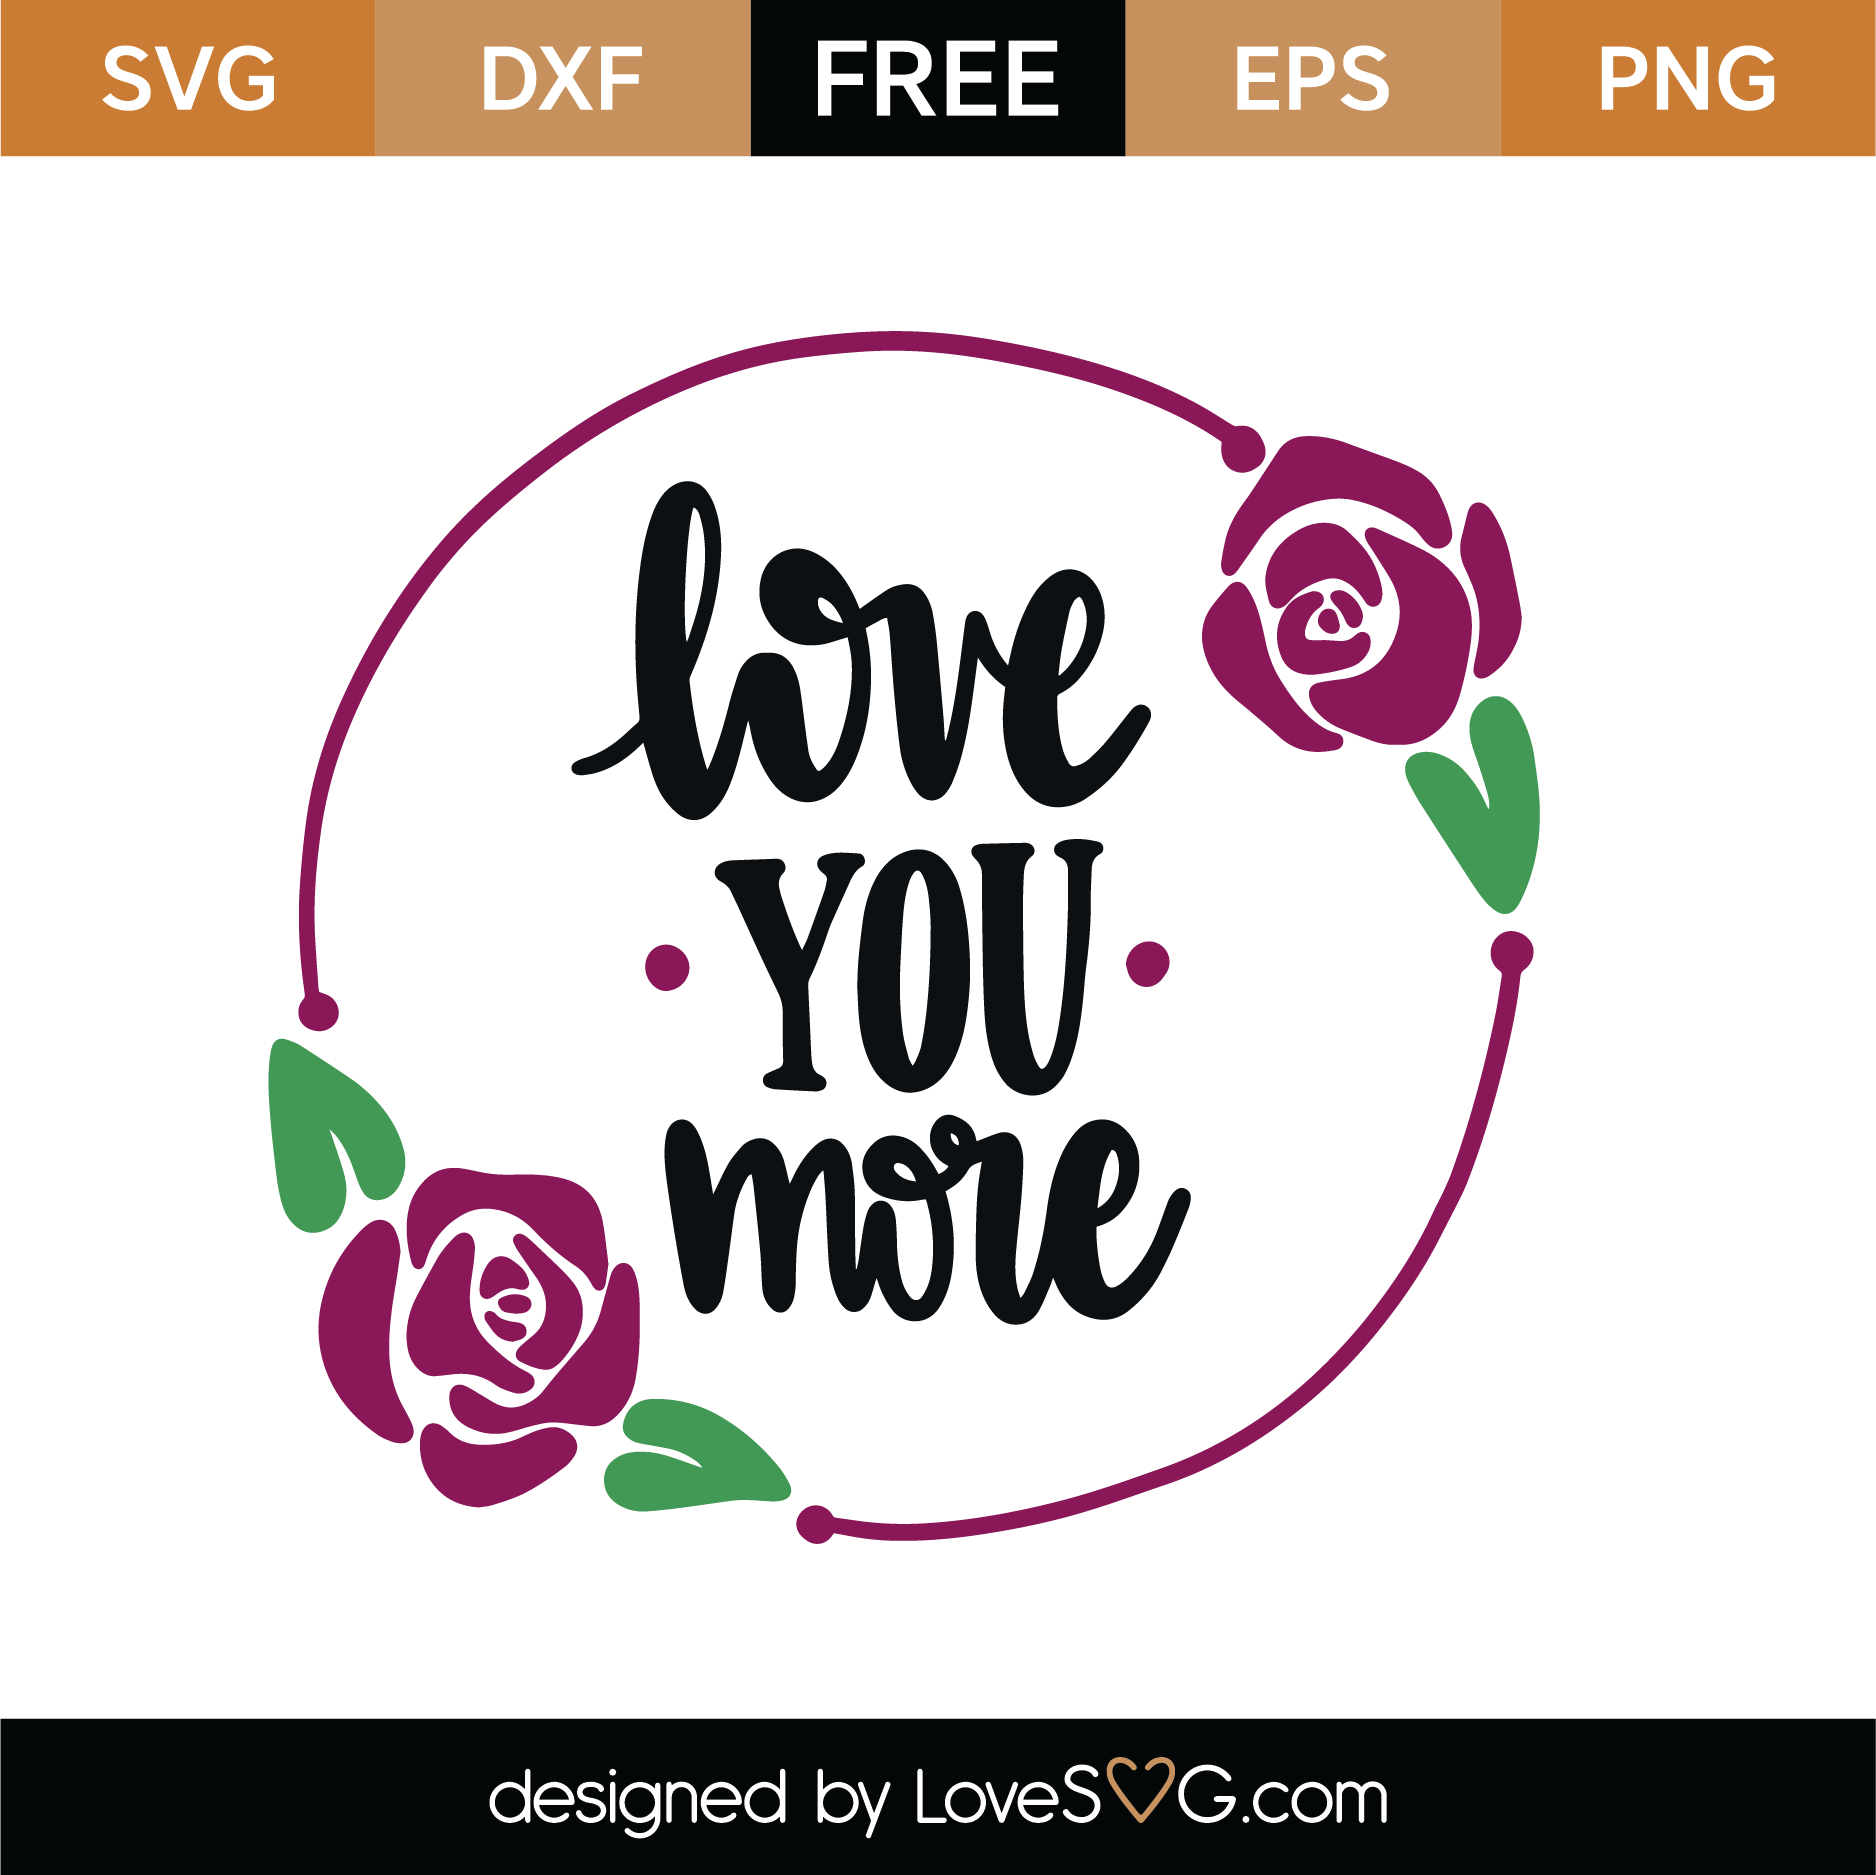 Download Free Love You More SVG Cut File | Lovesvg.com